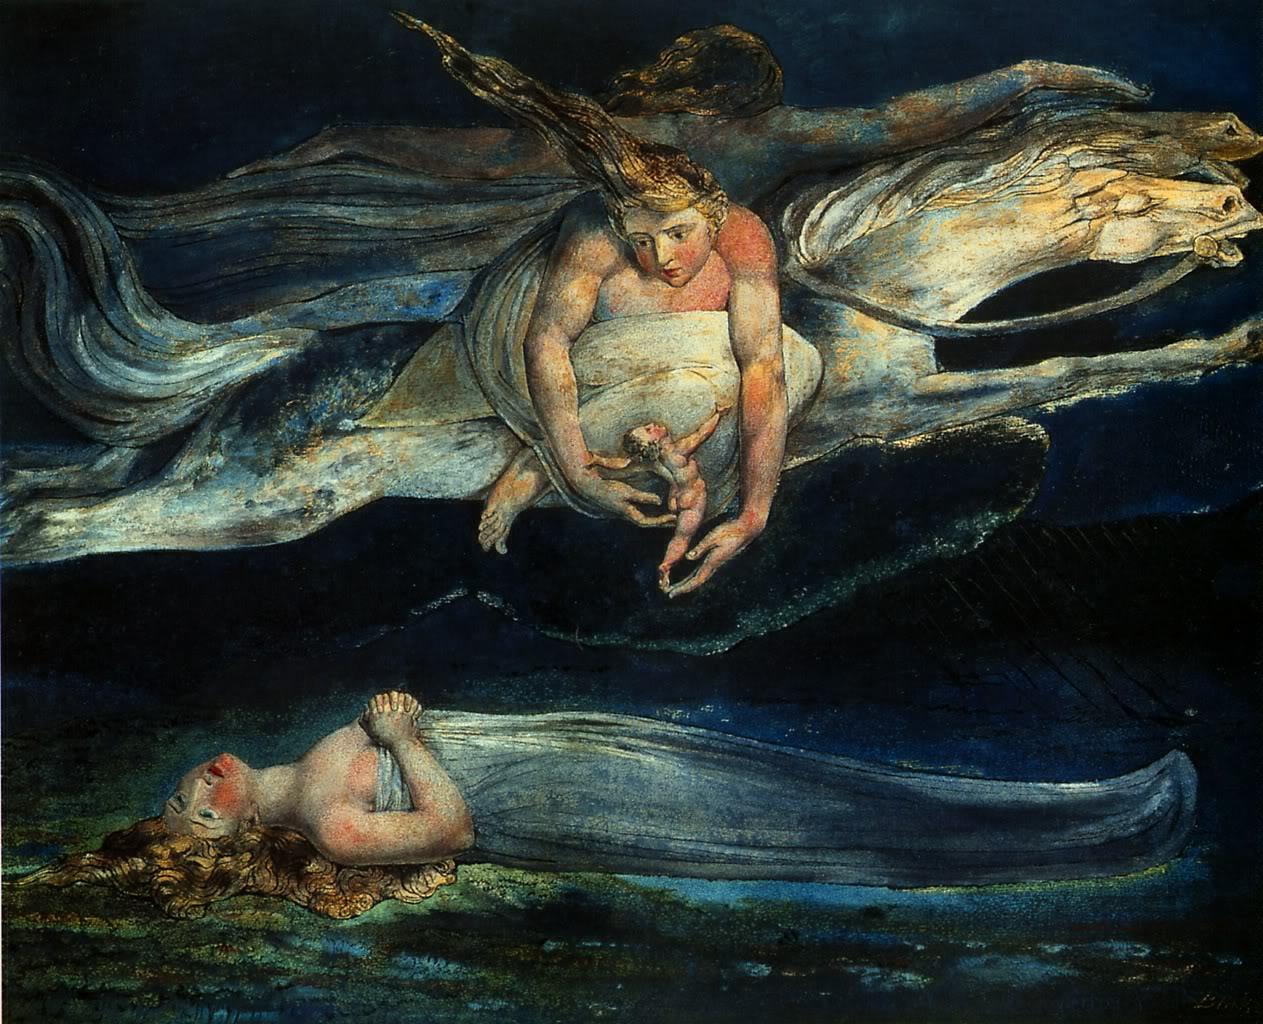 Pity de William Blake